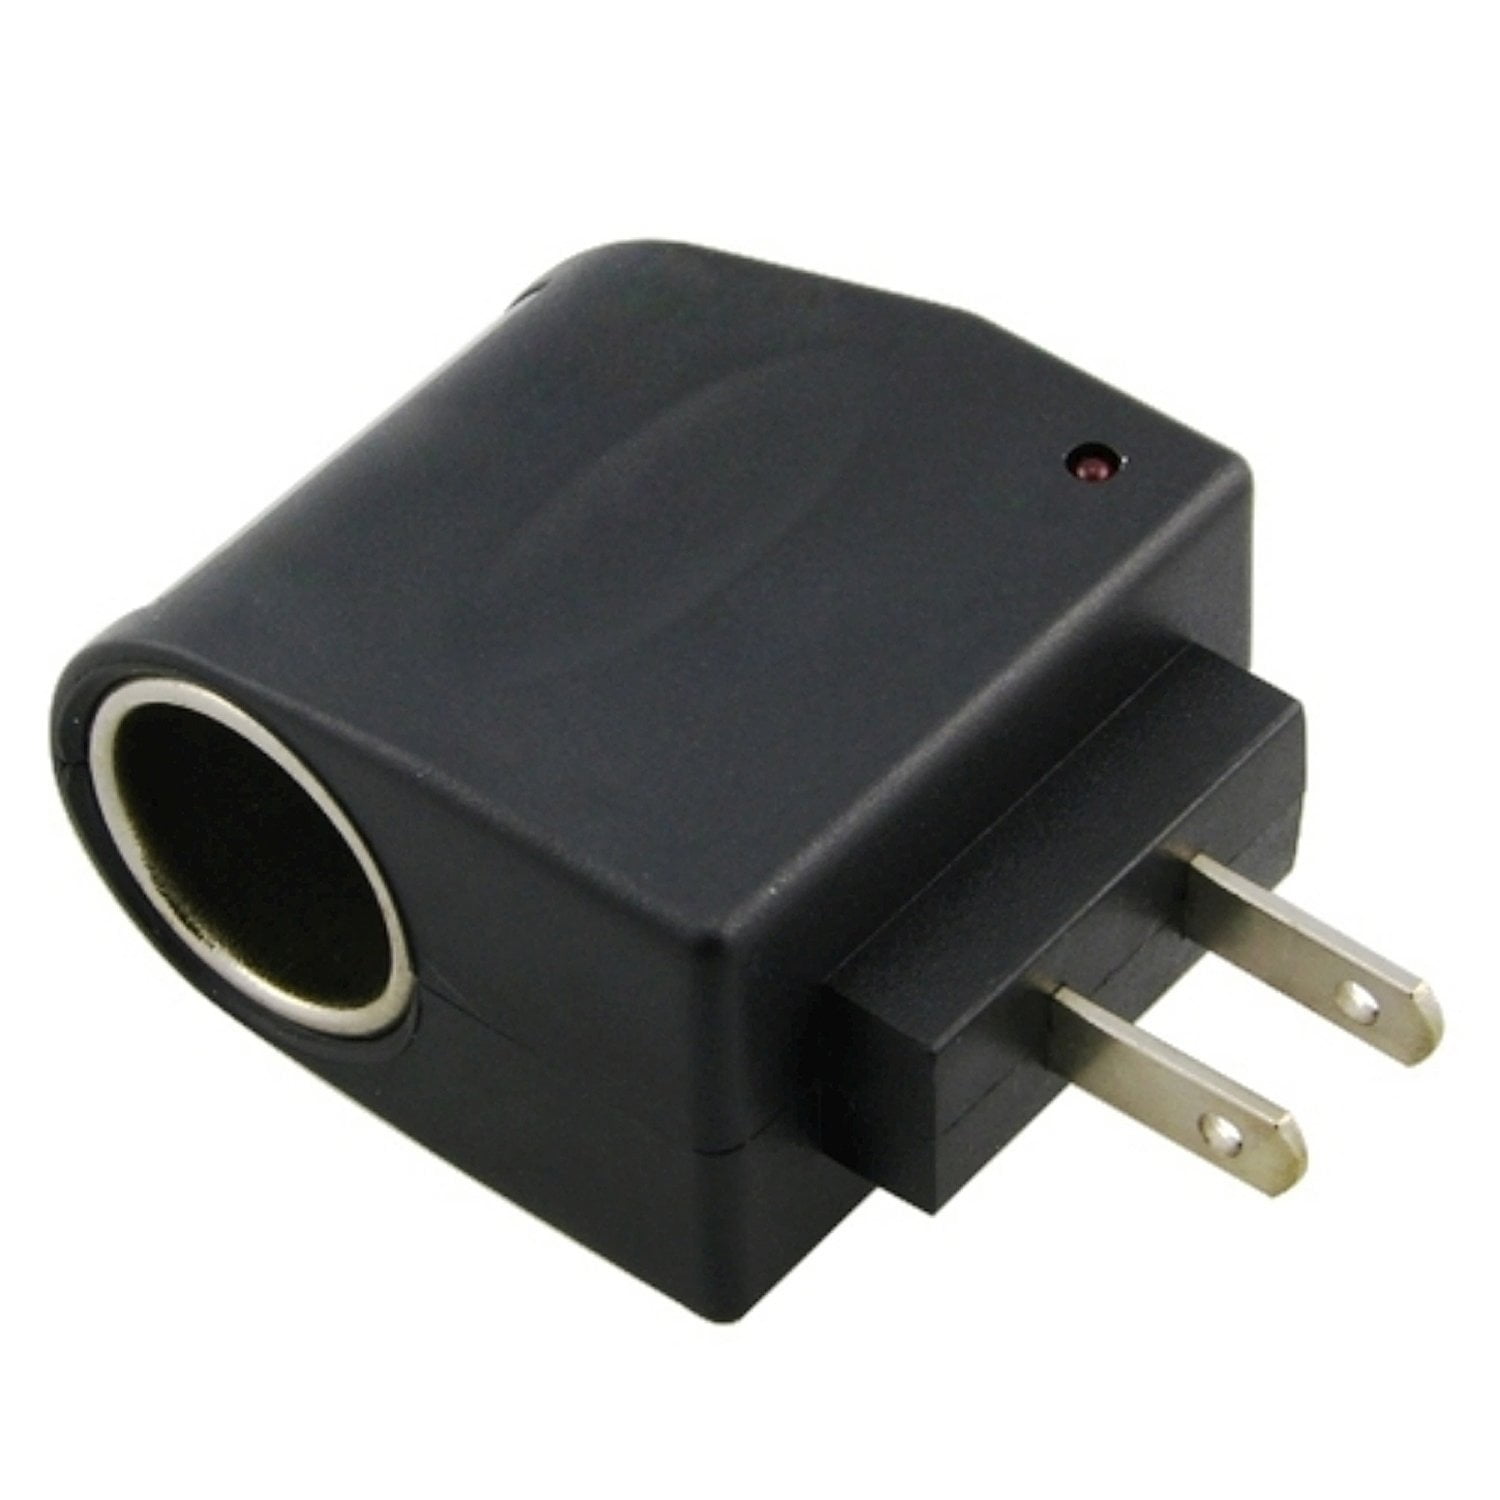 Universal AC to DC Car Cigarette Lighter Socket Adapter US Plug